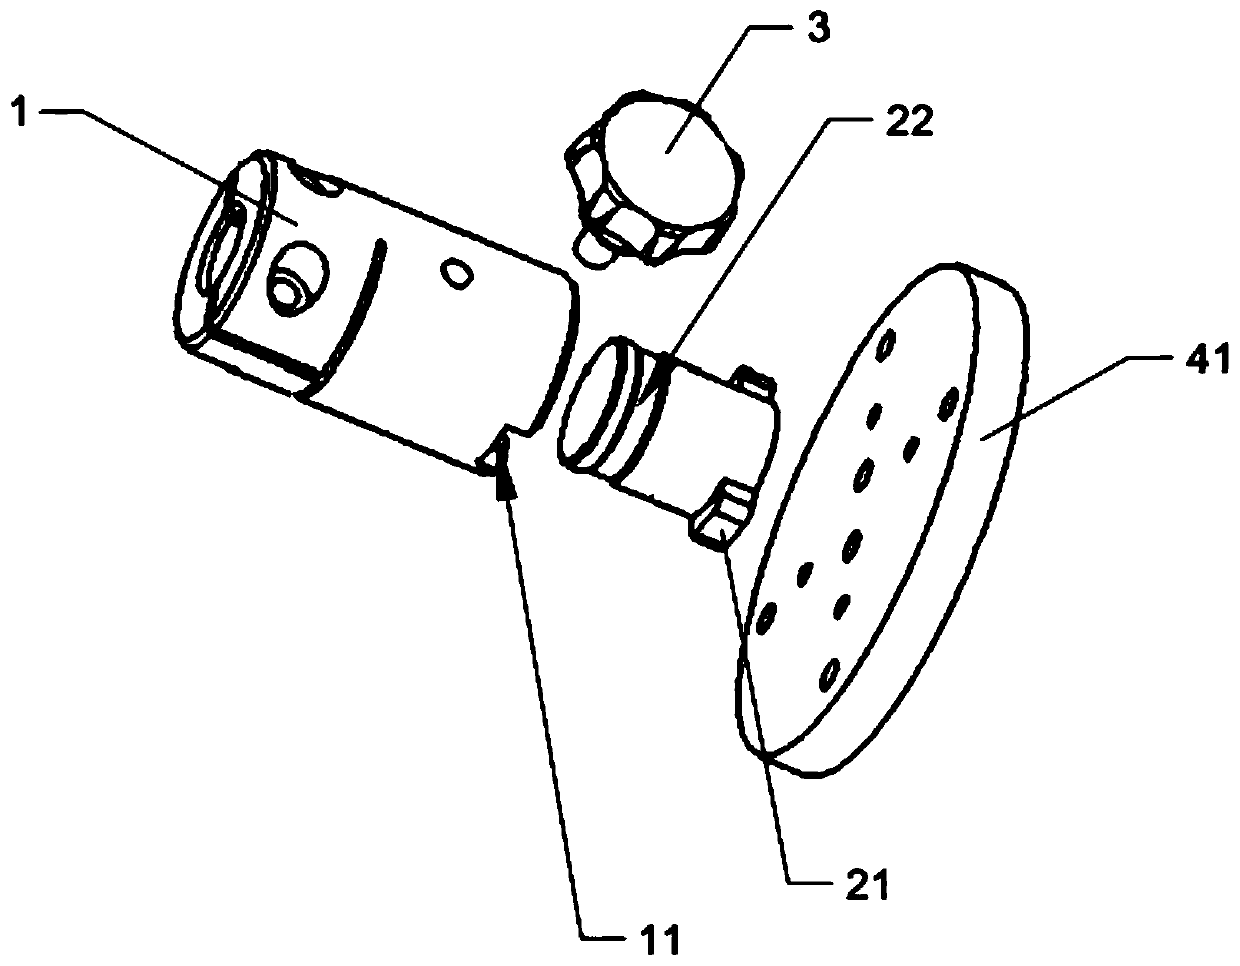 Multifunctional grinding head mechanism and main shaft